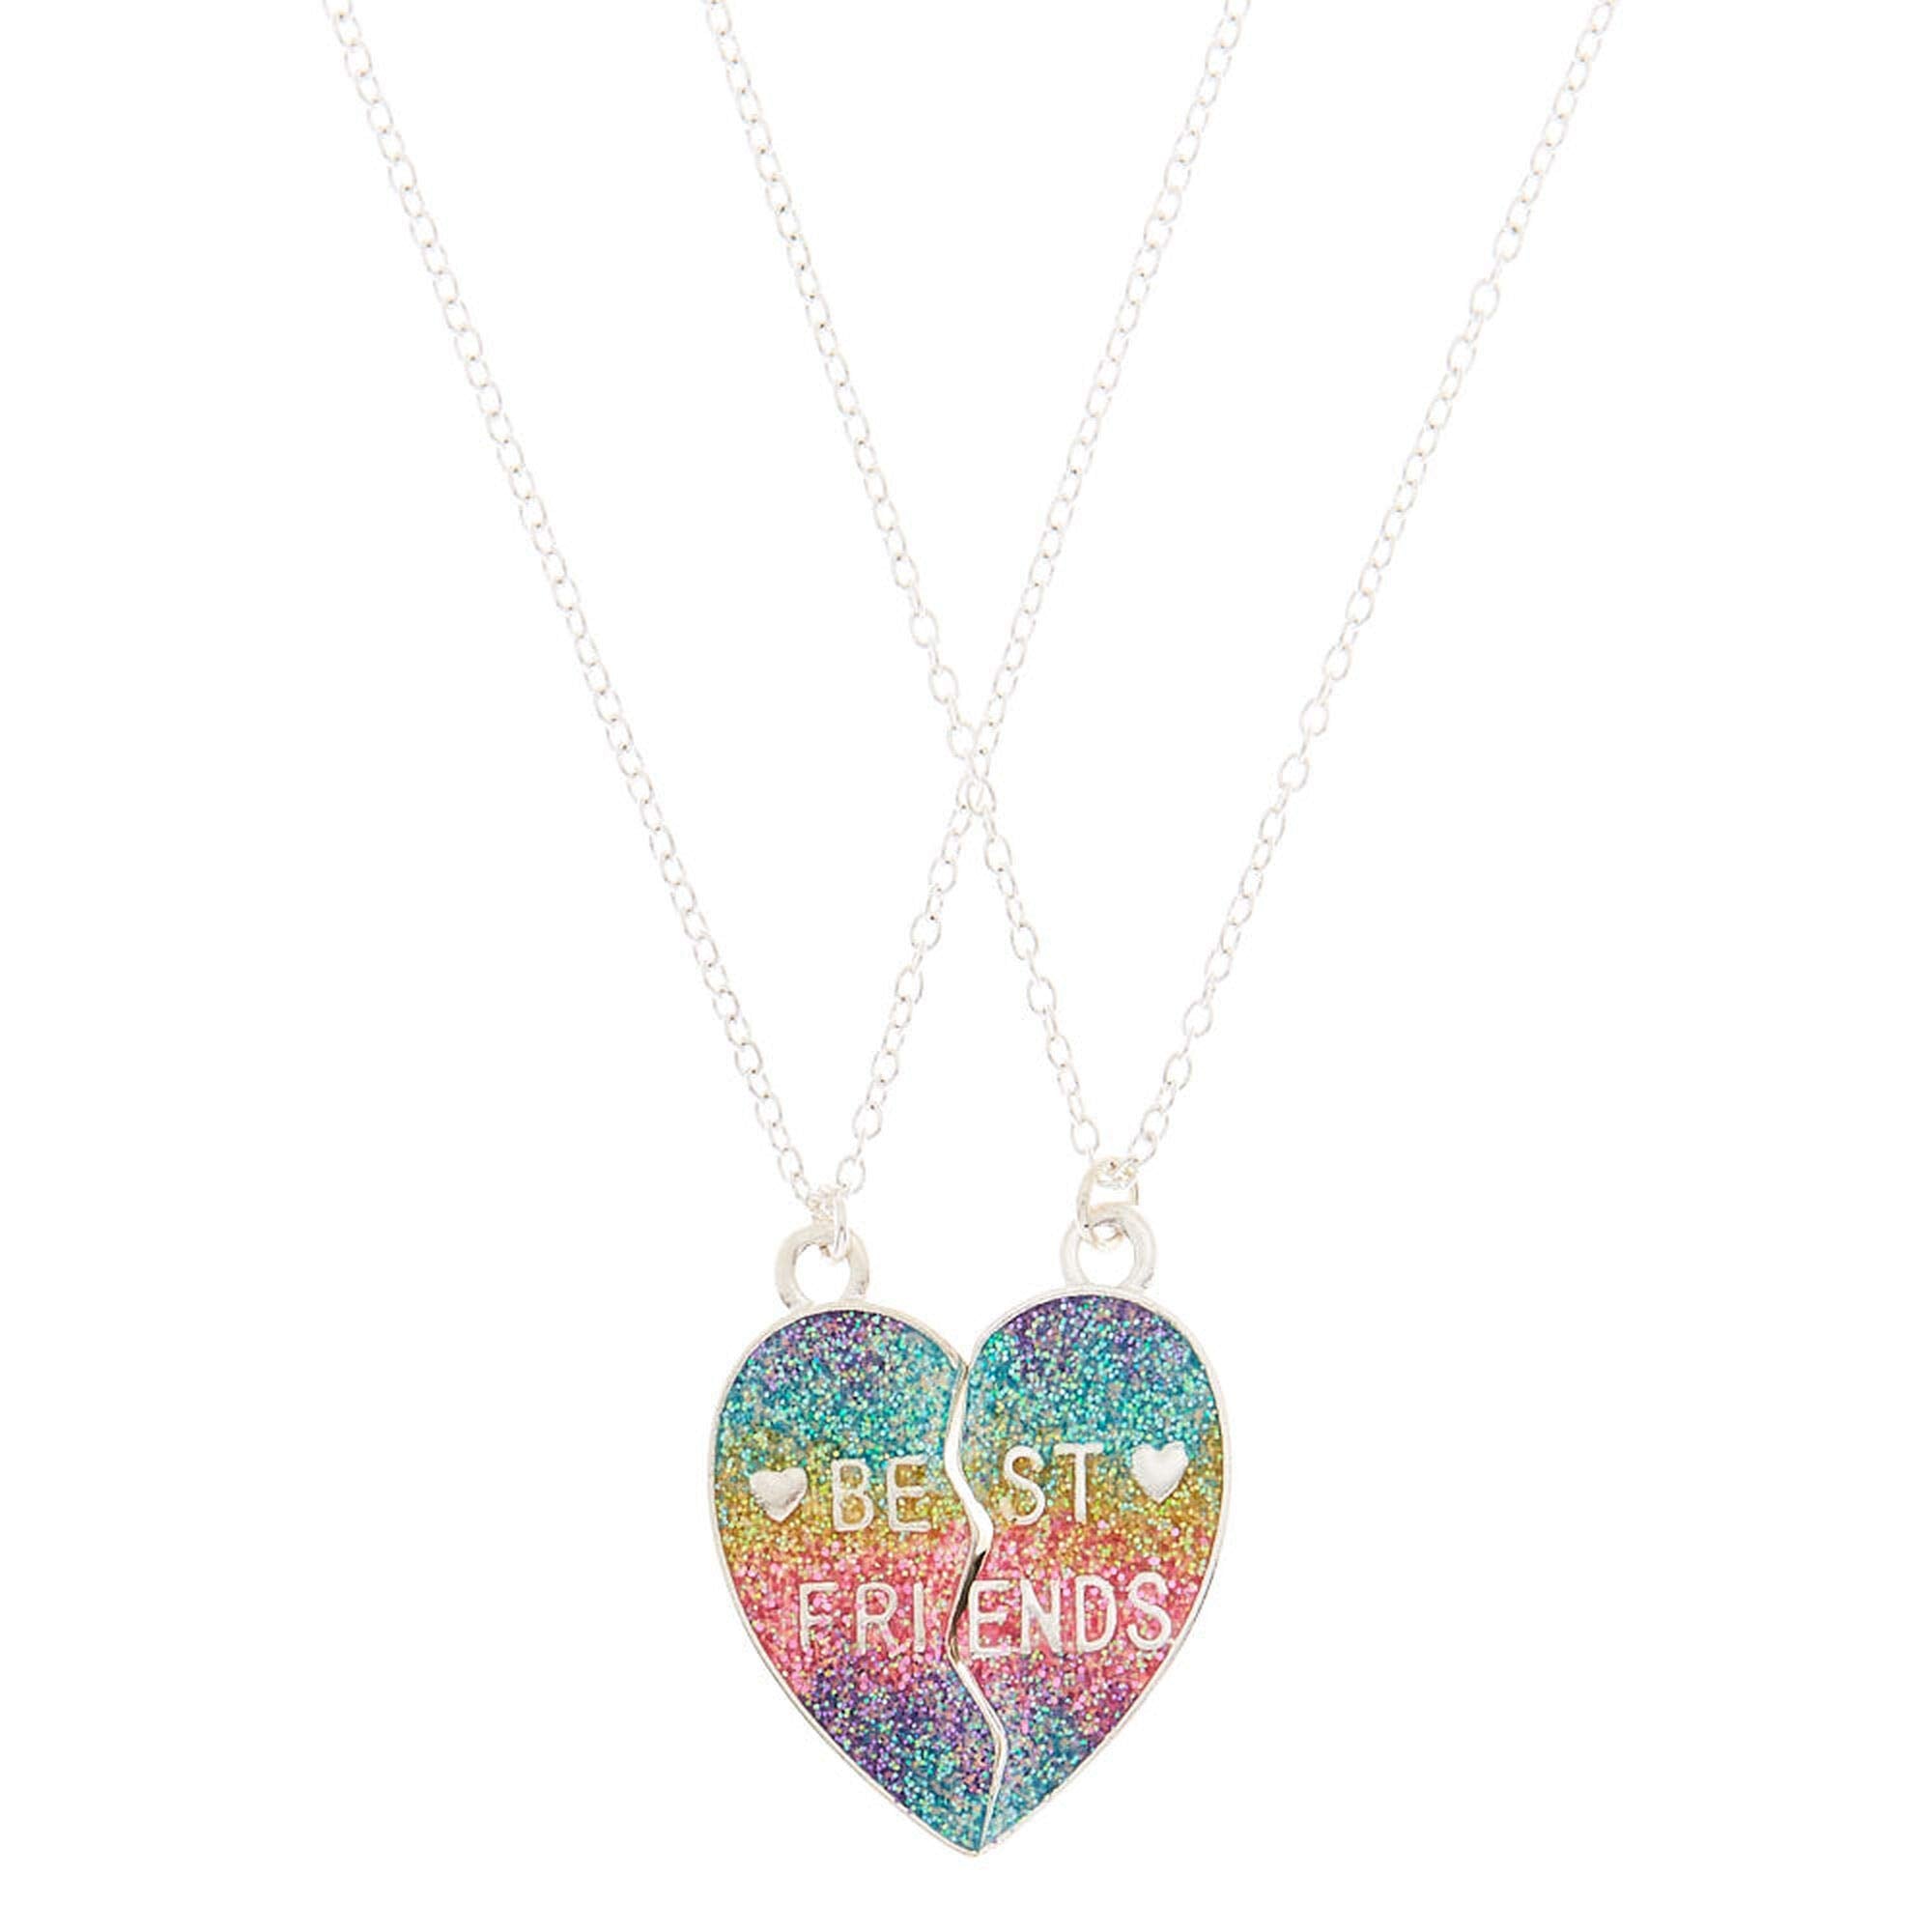 Claire's Best Friends Rainbow Heart Glitter Pendant Necklaces - 2 Pack